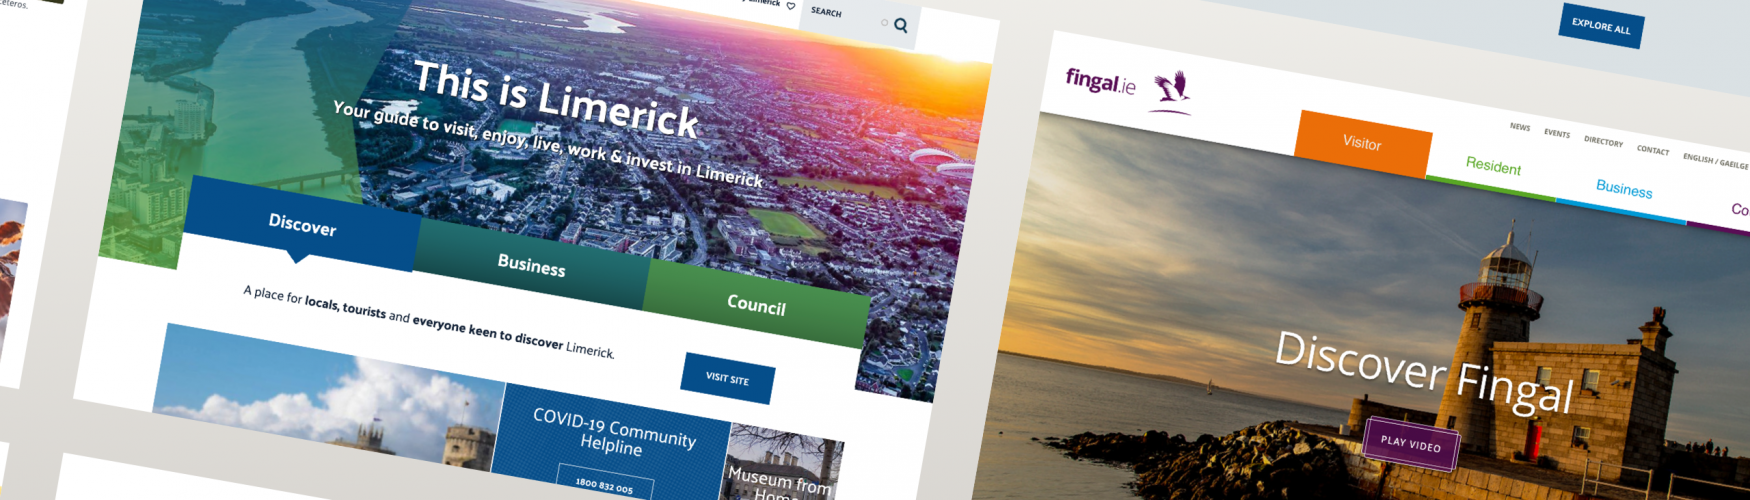 Screenshots of Fingal and Limerick council websites